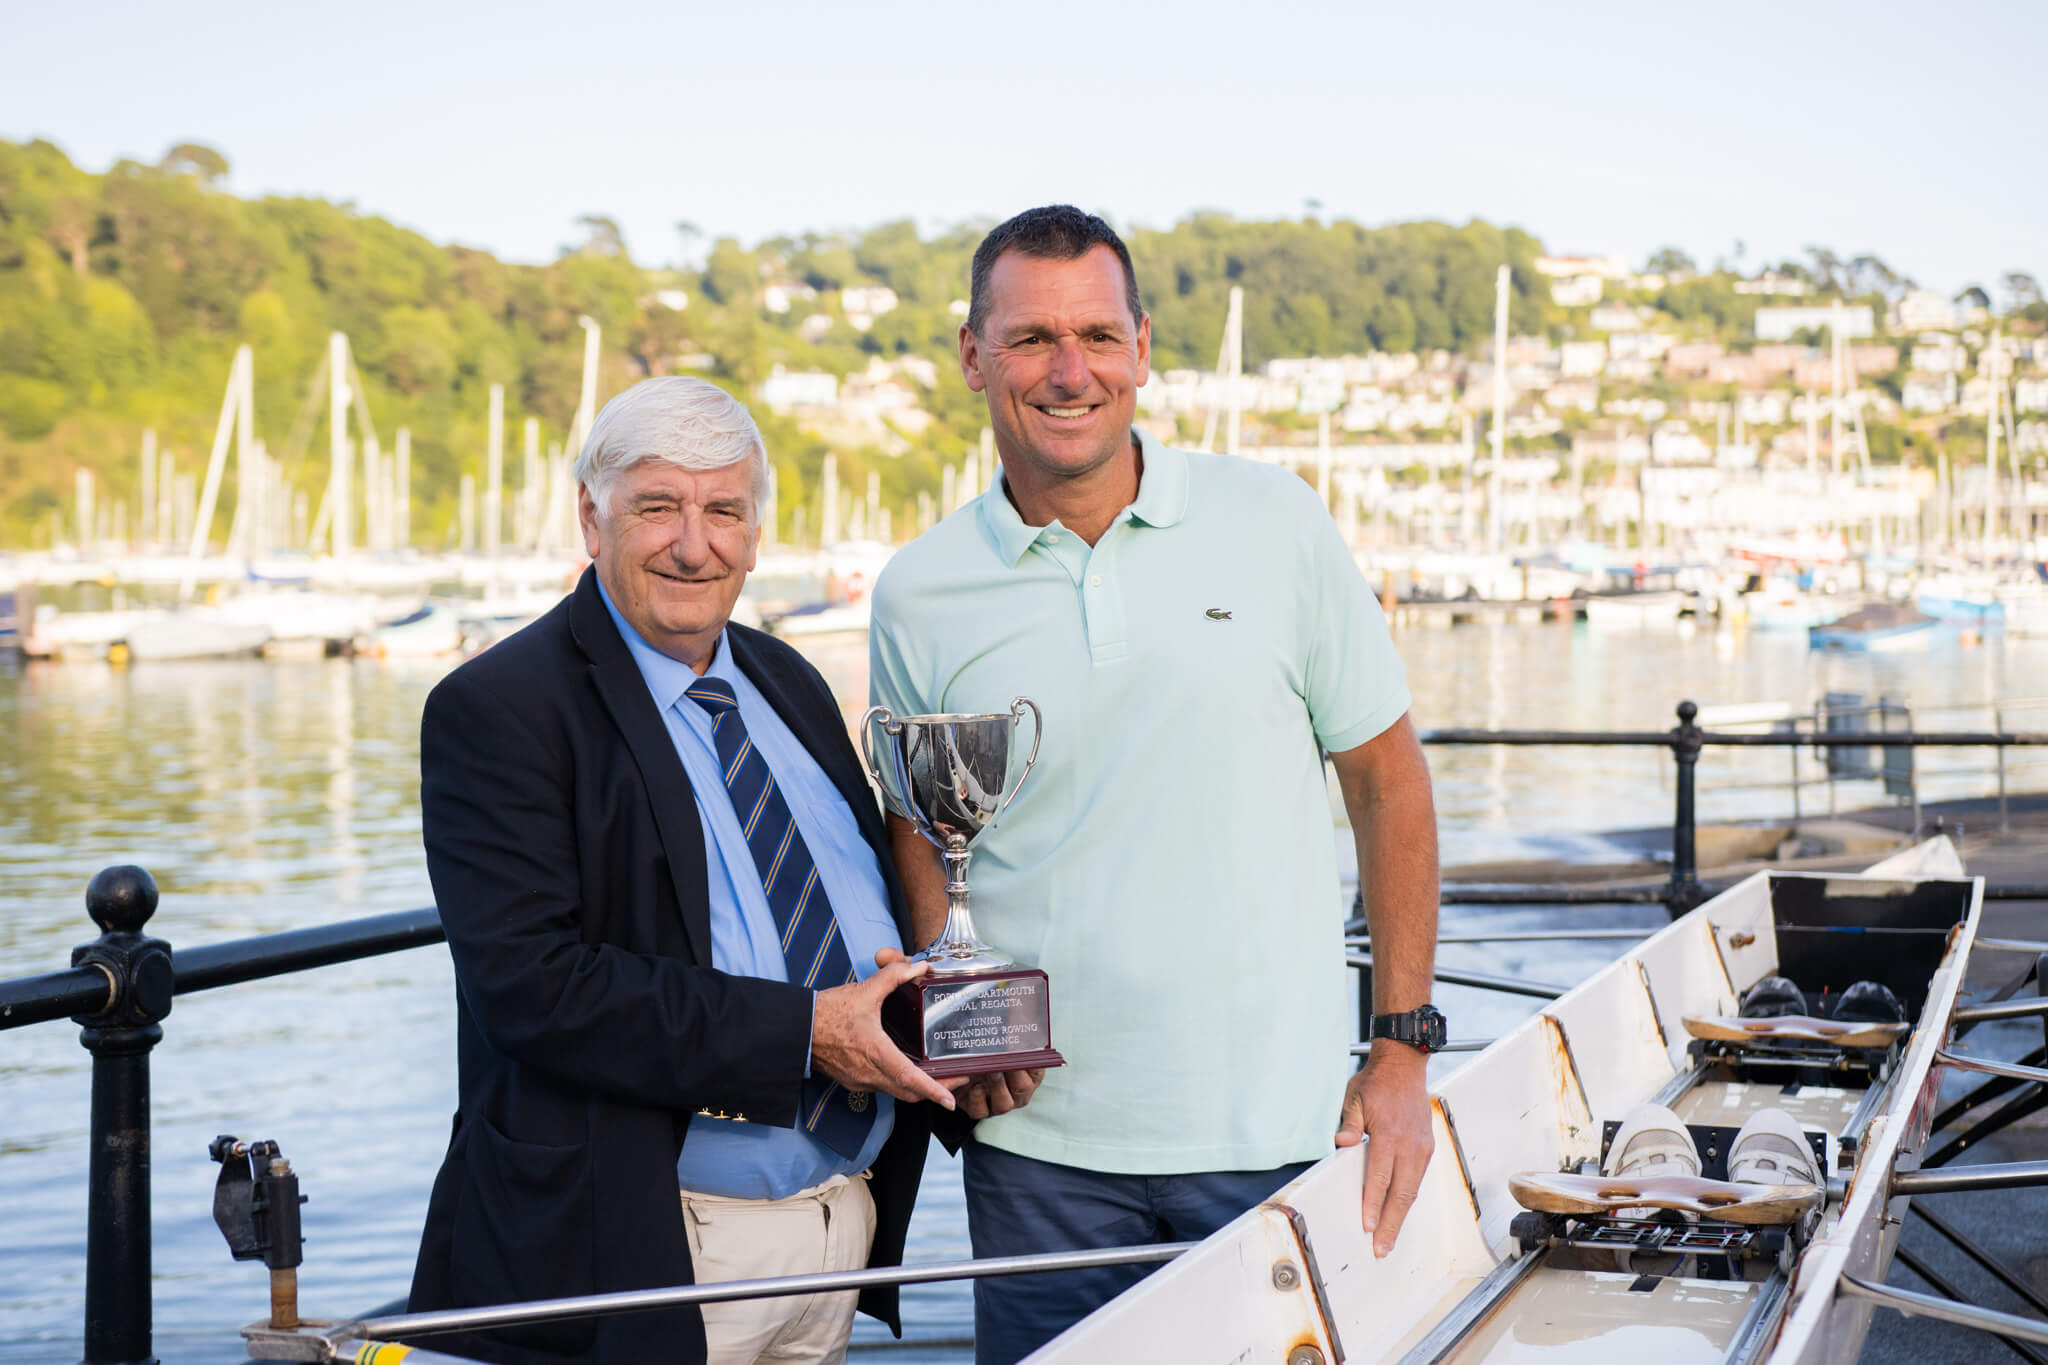 Baker Estates named as a headline sponsor for the Port of Dartmouth Royal Regatta 2022